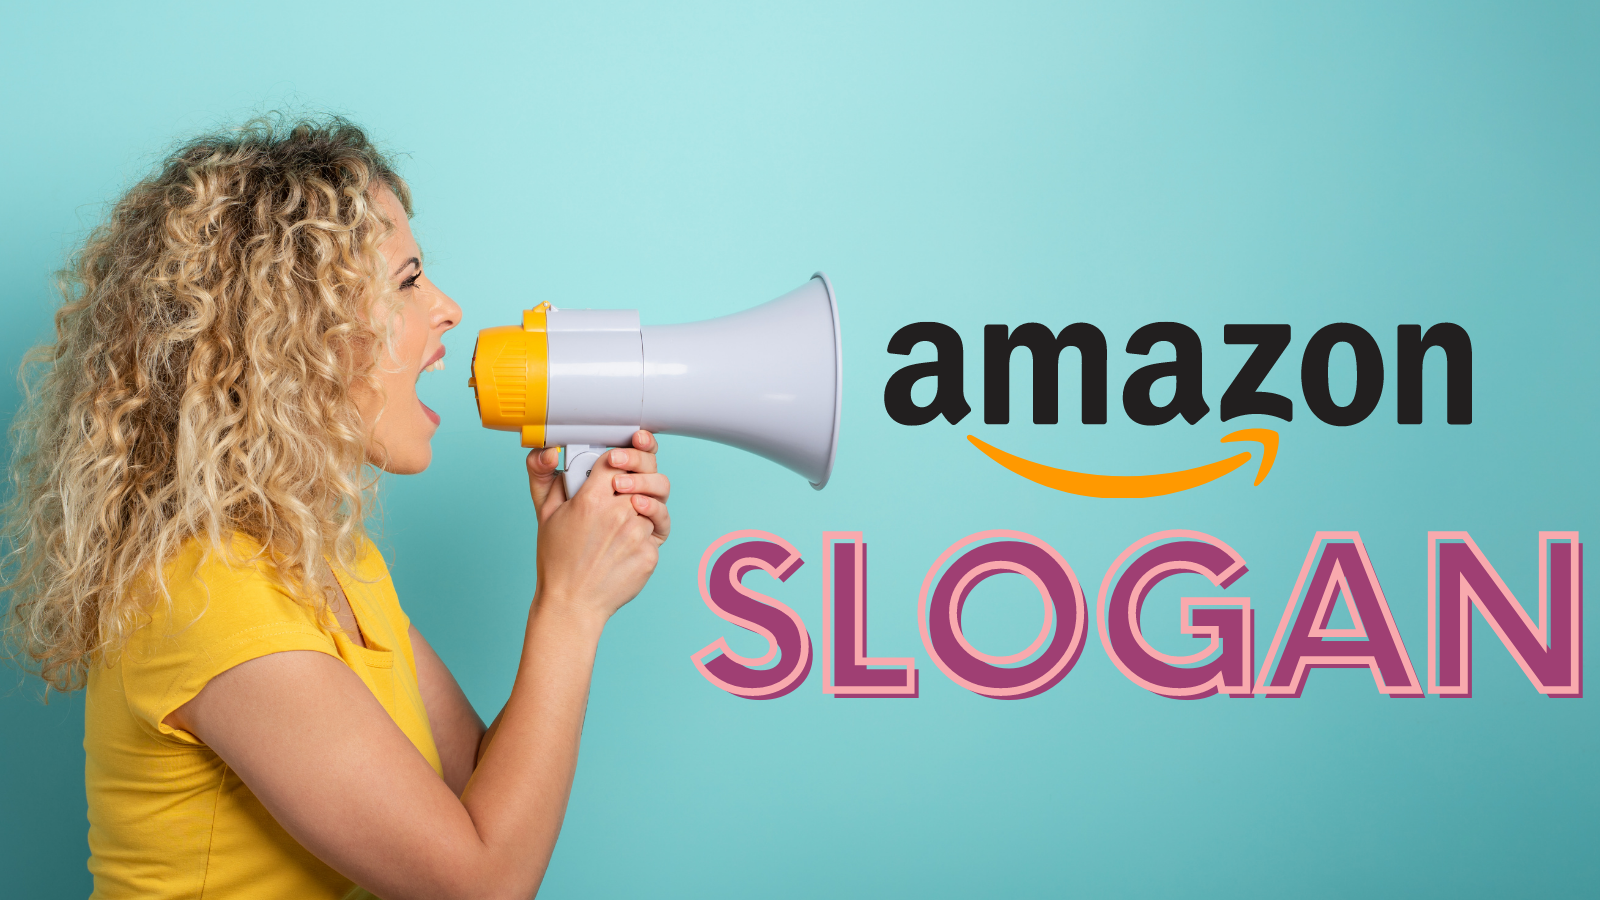 What Is Amazon’s Slogan 2022? The Retail Giant’s Catchphrase